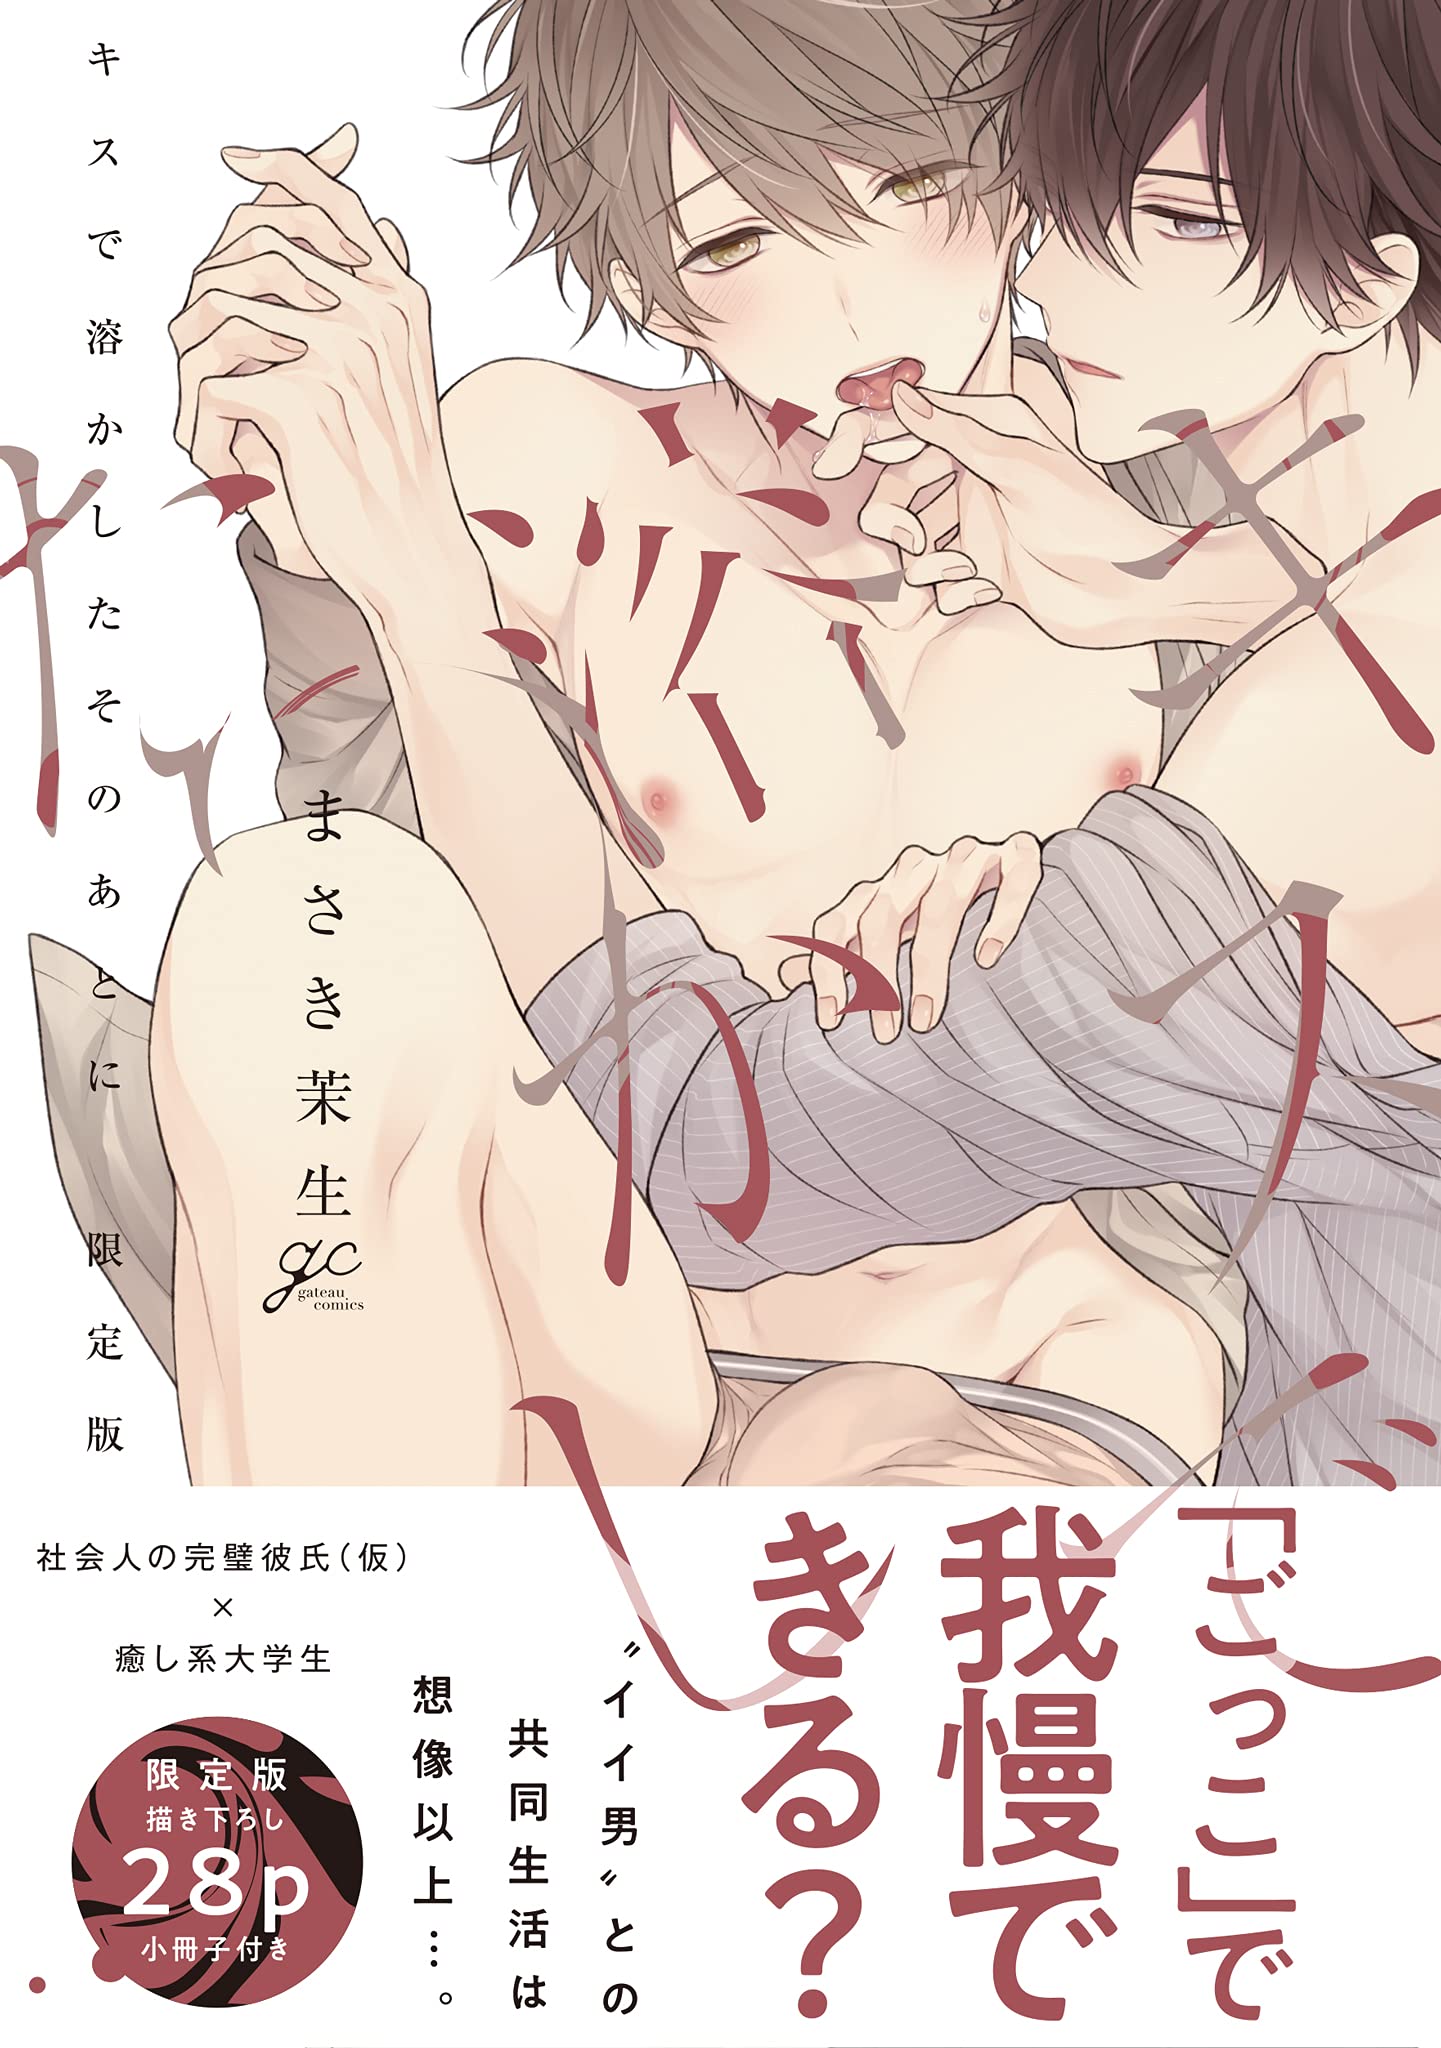 Boys Love (Yaoi) Comics - Kiss de Tokashita Sonoato ni (キスで溶かしたそのあとに 限定版 (gateauコミックス)) / Masaki Maki